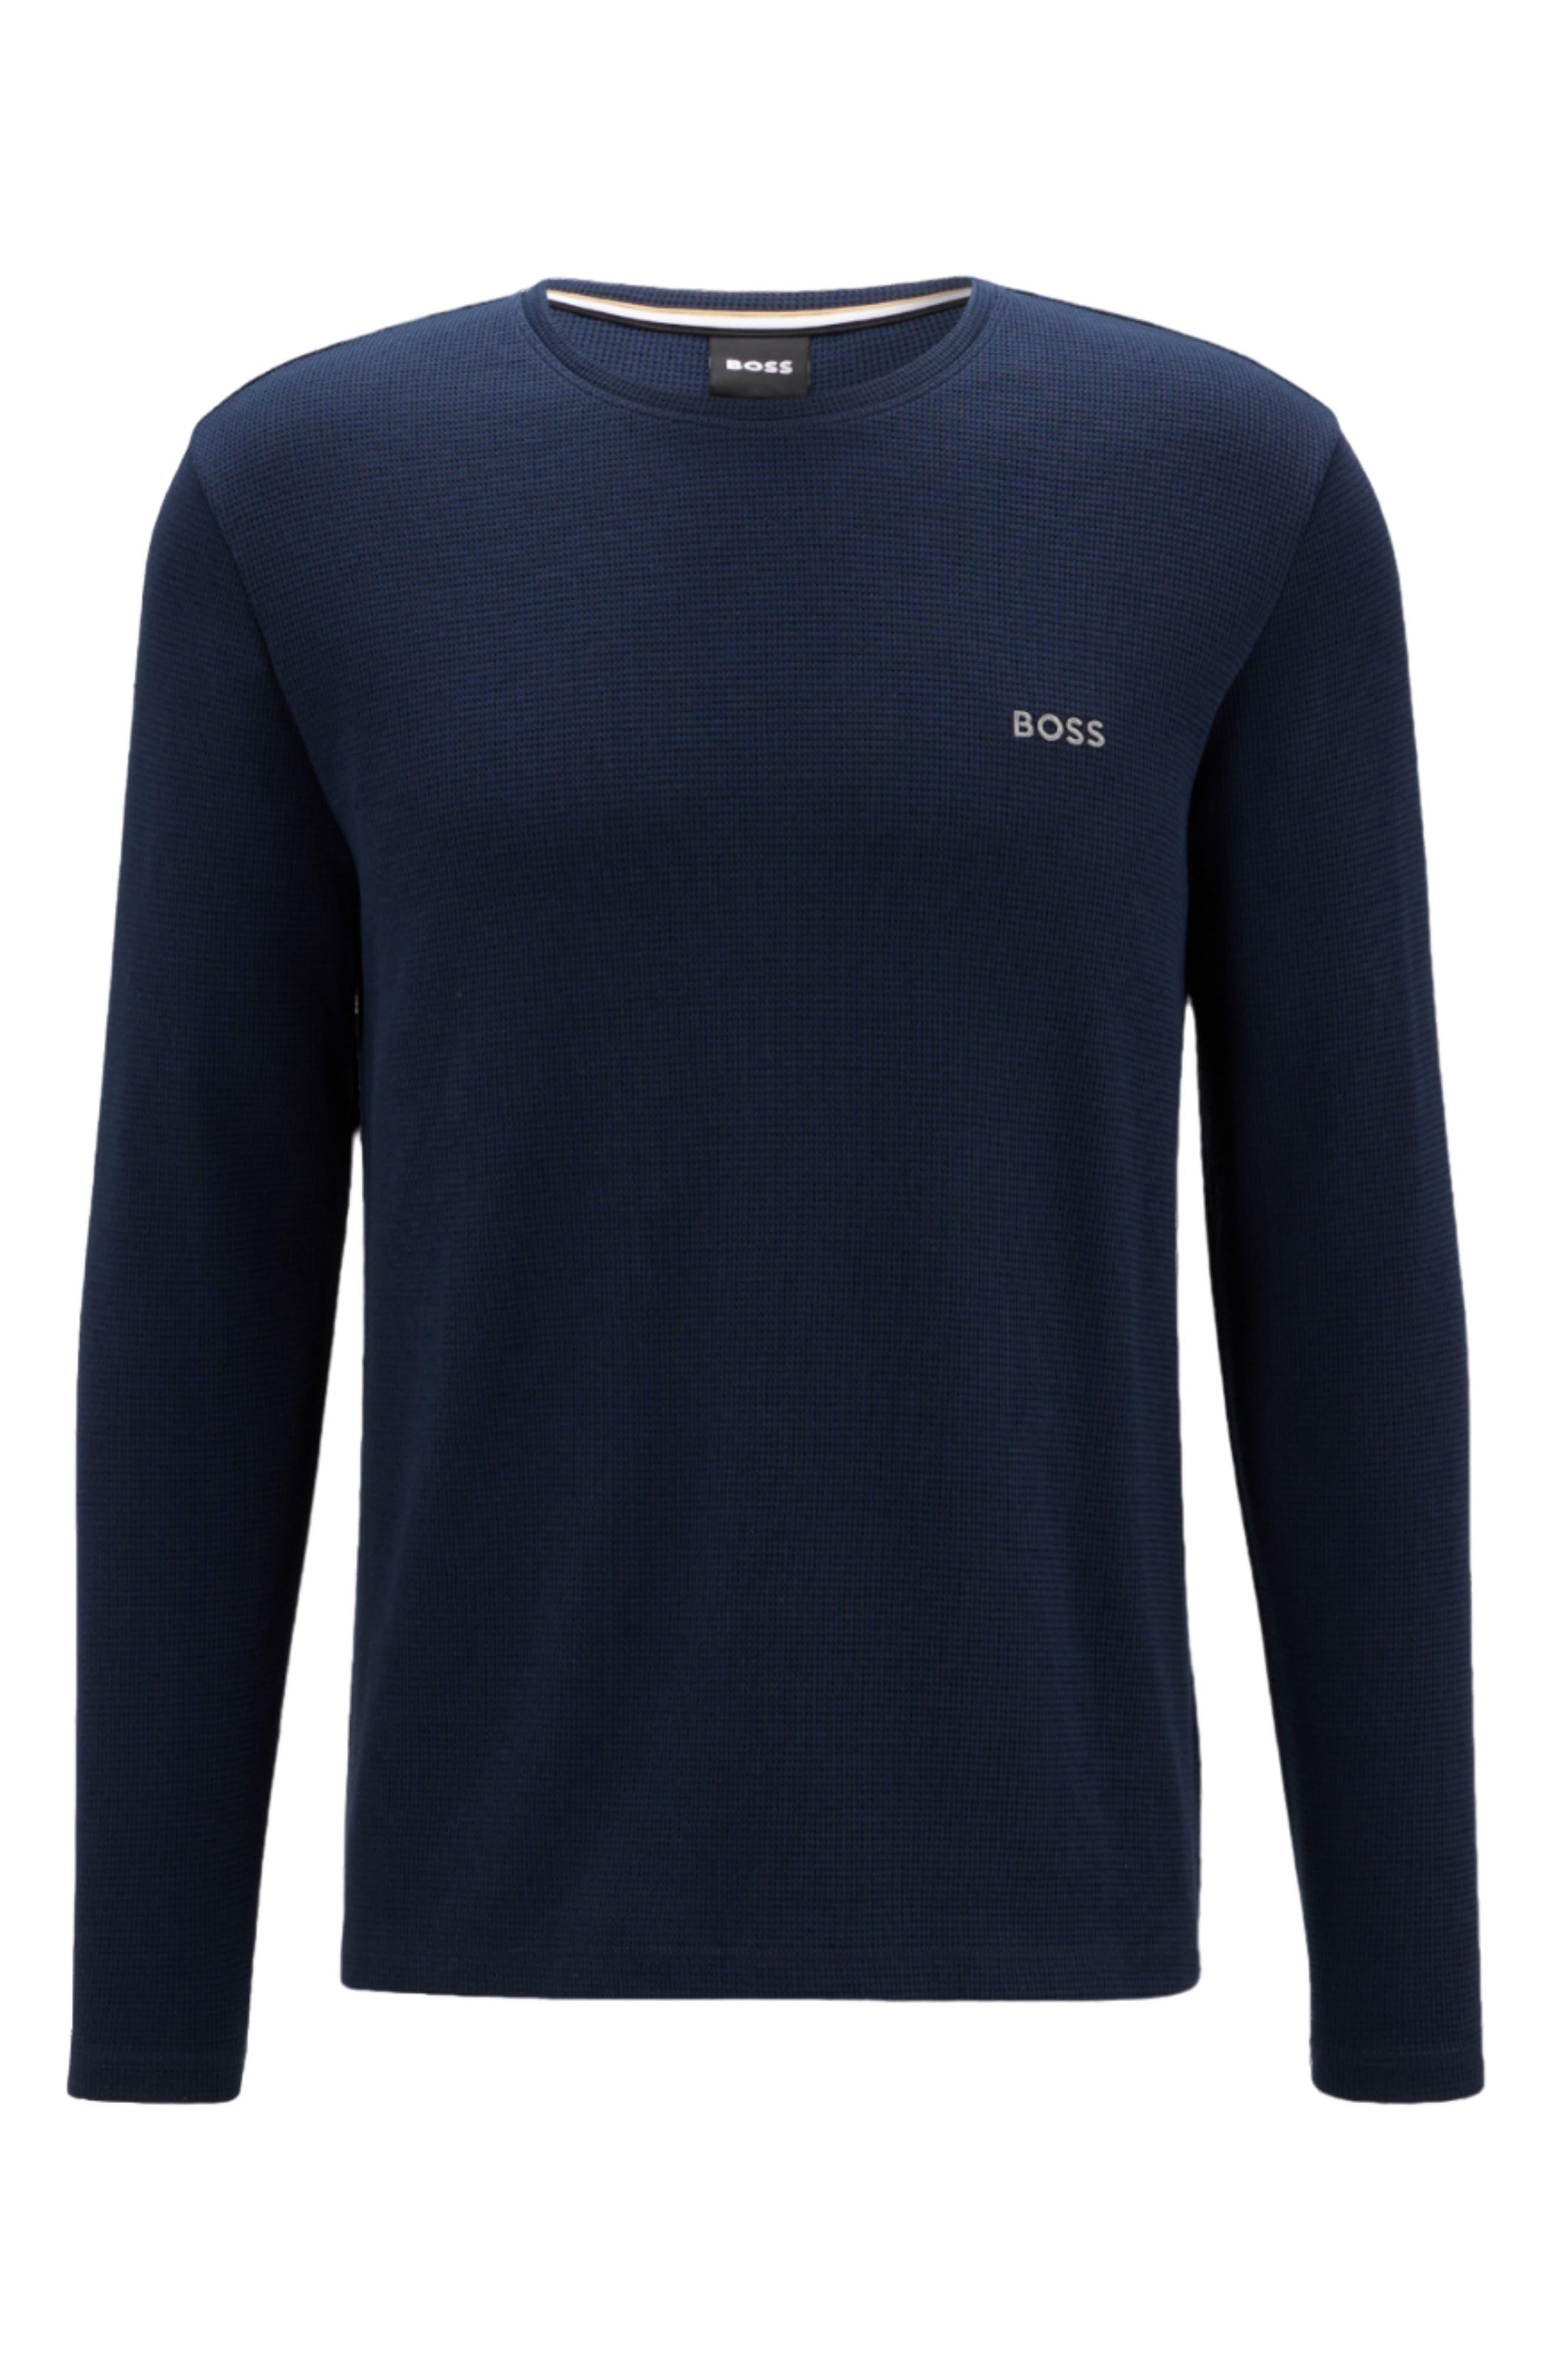 BOSS by HUGO BOSS Long Sleeve Waffle Knit Cotton Blend T-shirt in Blue for  Men | Lyst